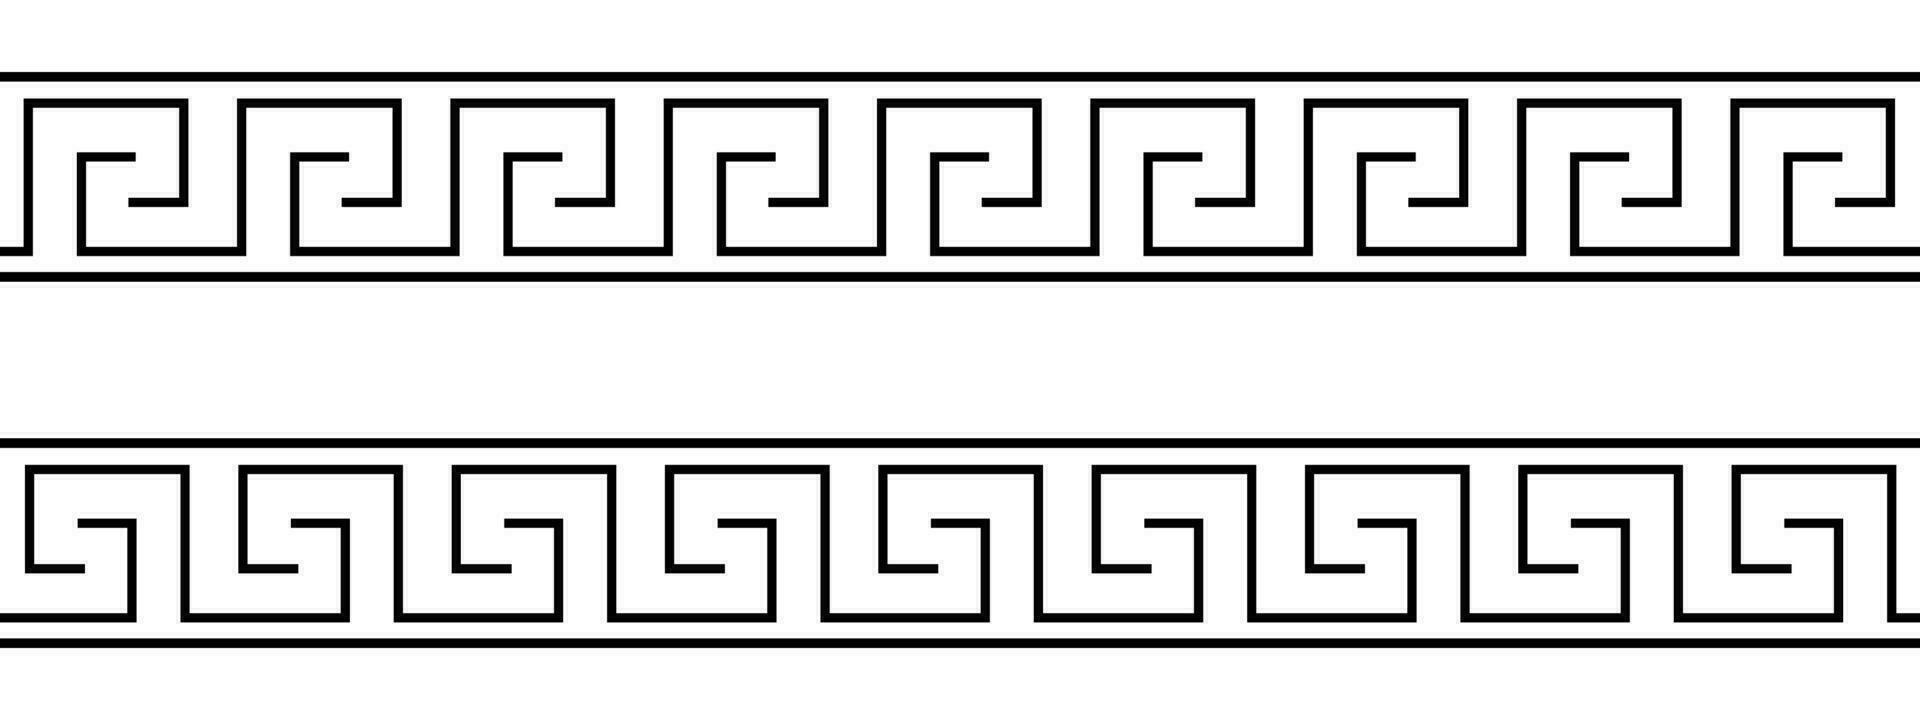 Seamless Greek key patterns vector